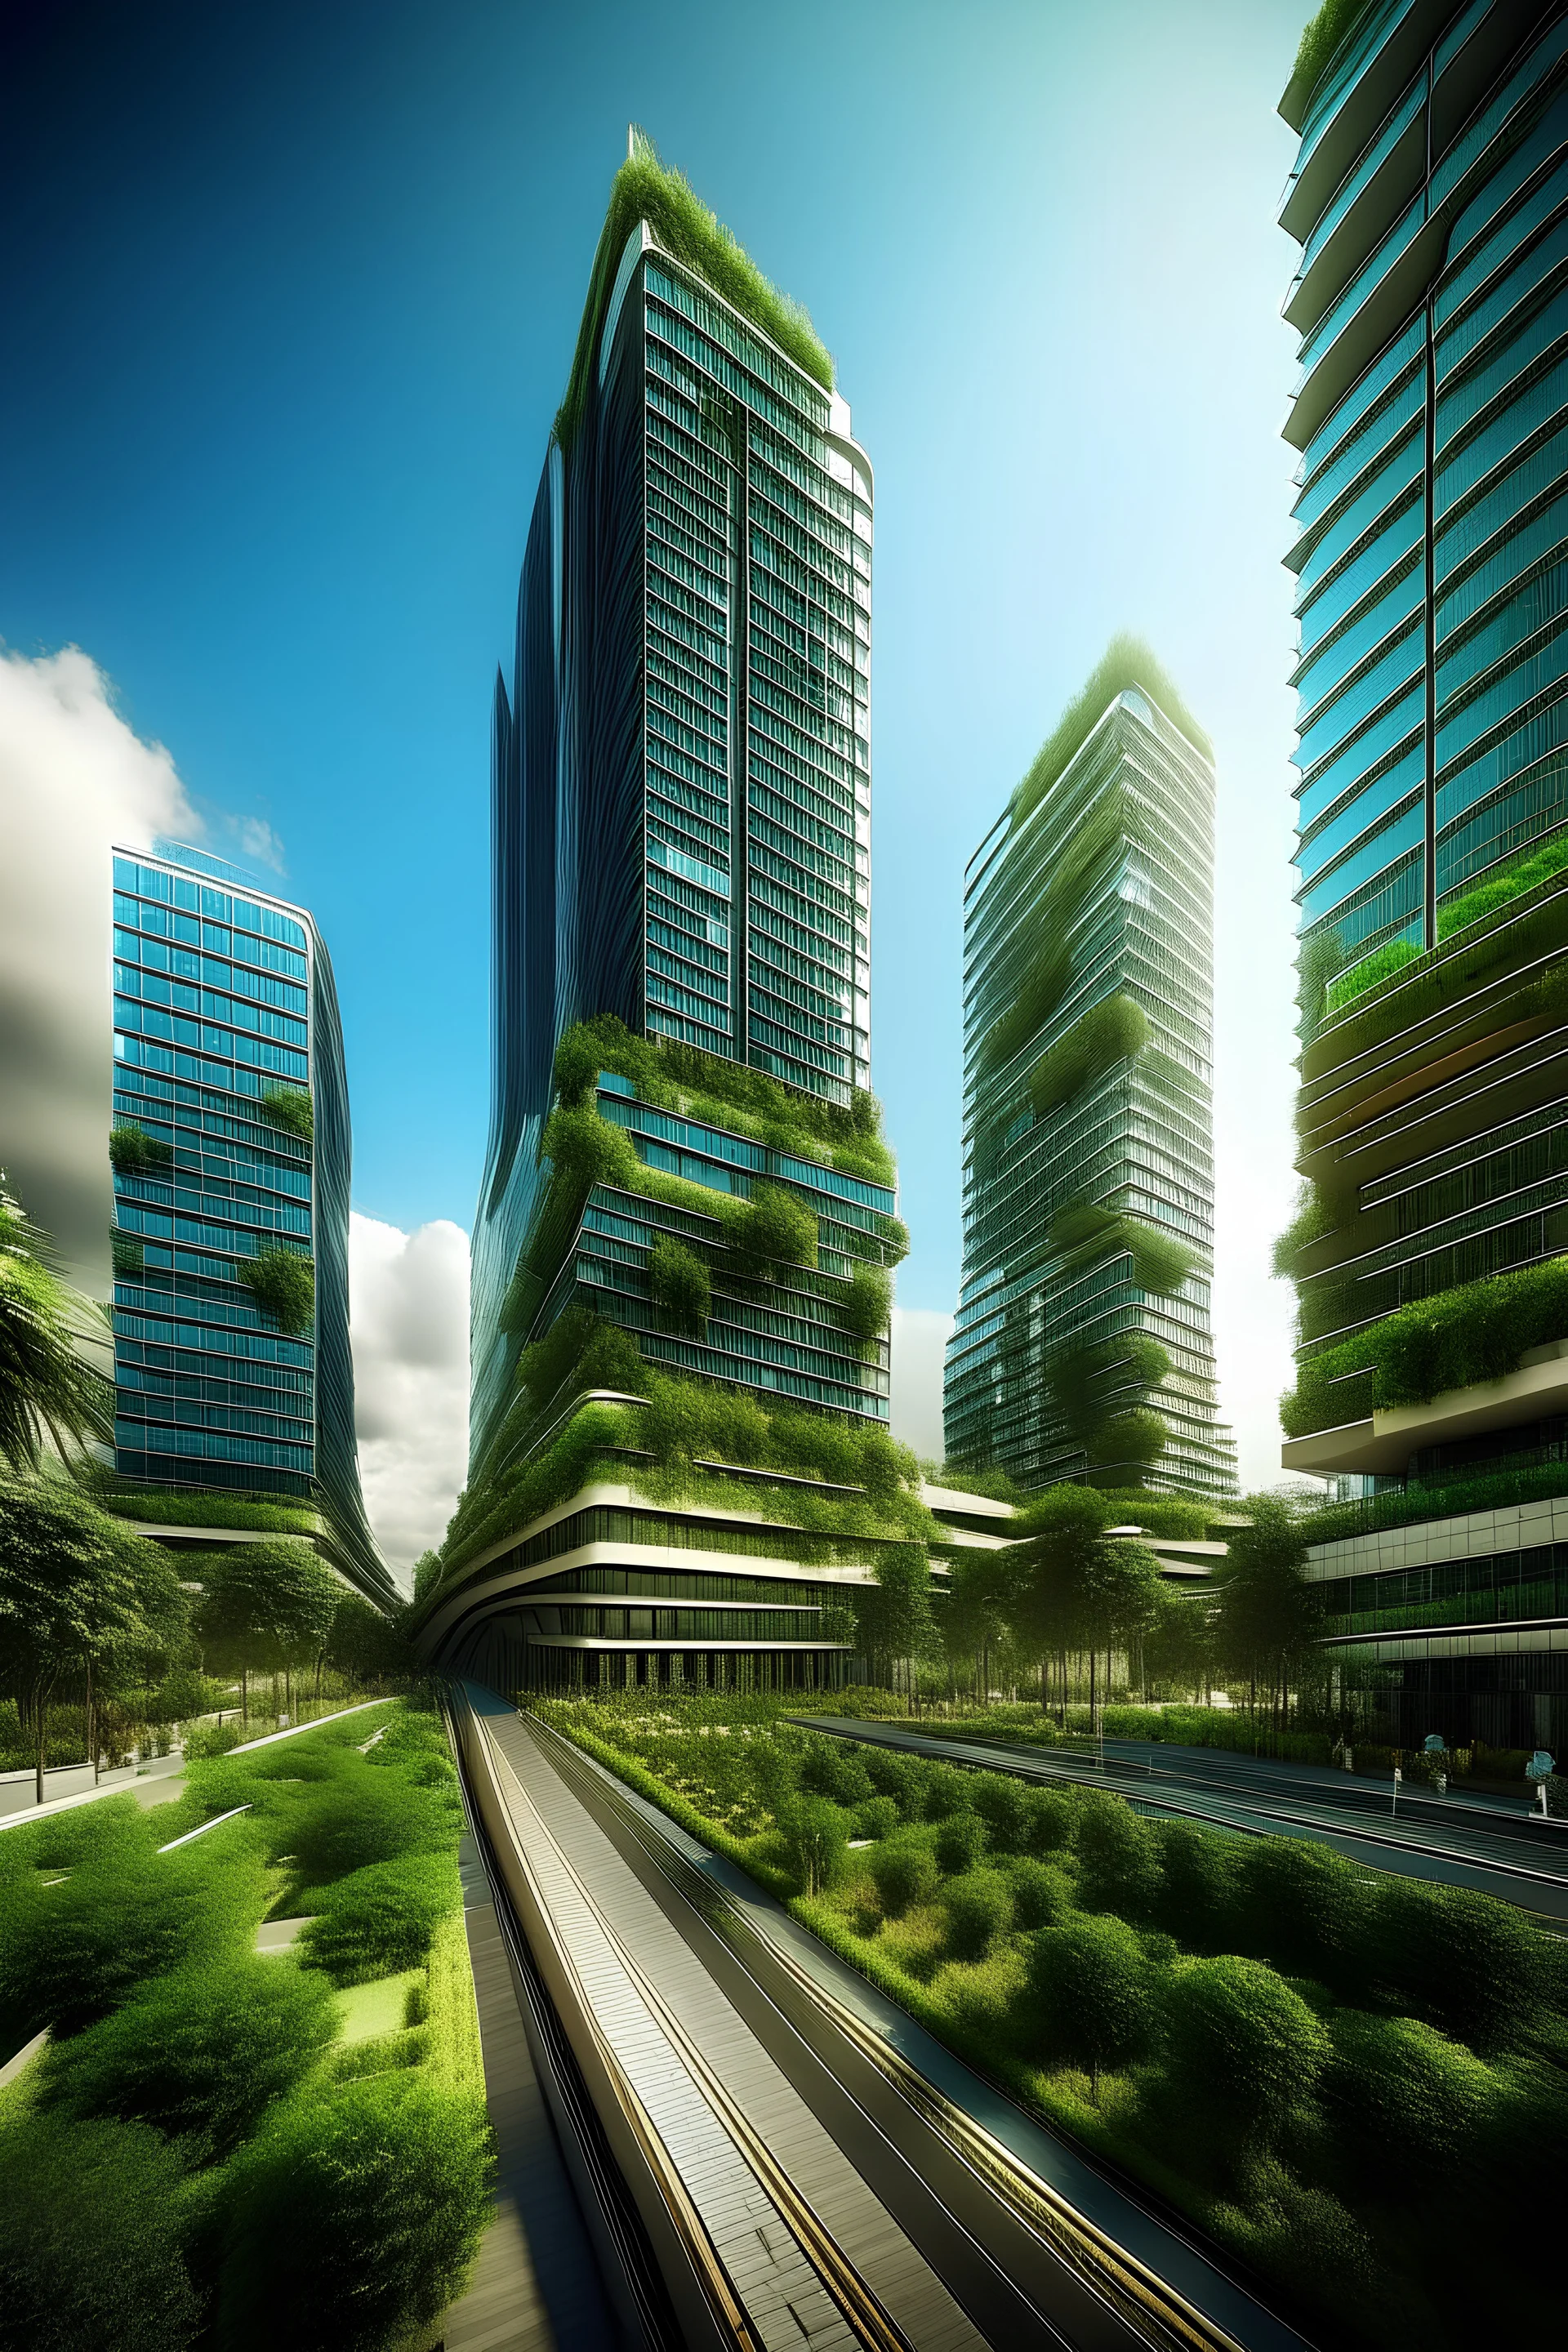 • Infrastructure • Transportation • Leisure center • Vegetation • Skyscrapers • Bustling • Prosperous • Cosmopolitan ARCHITECTURE